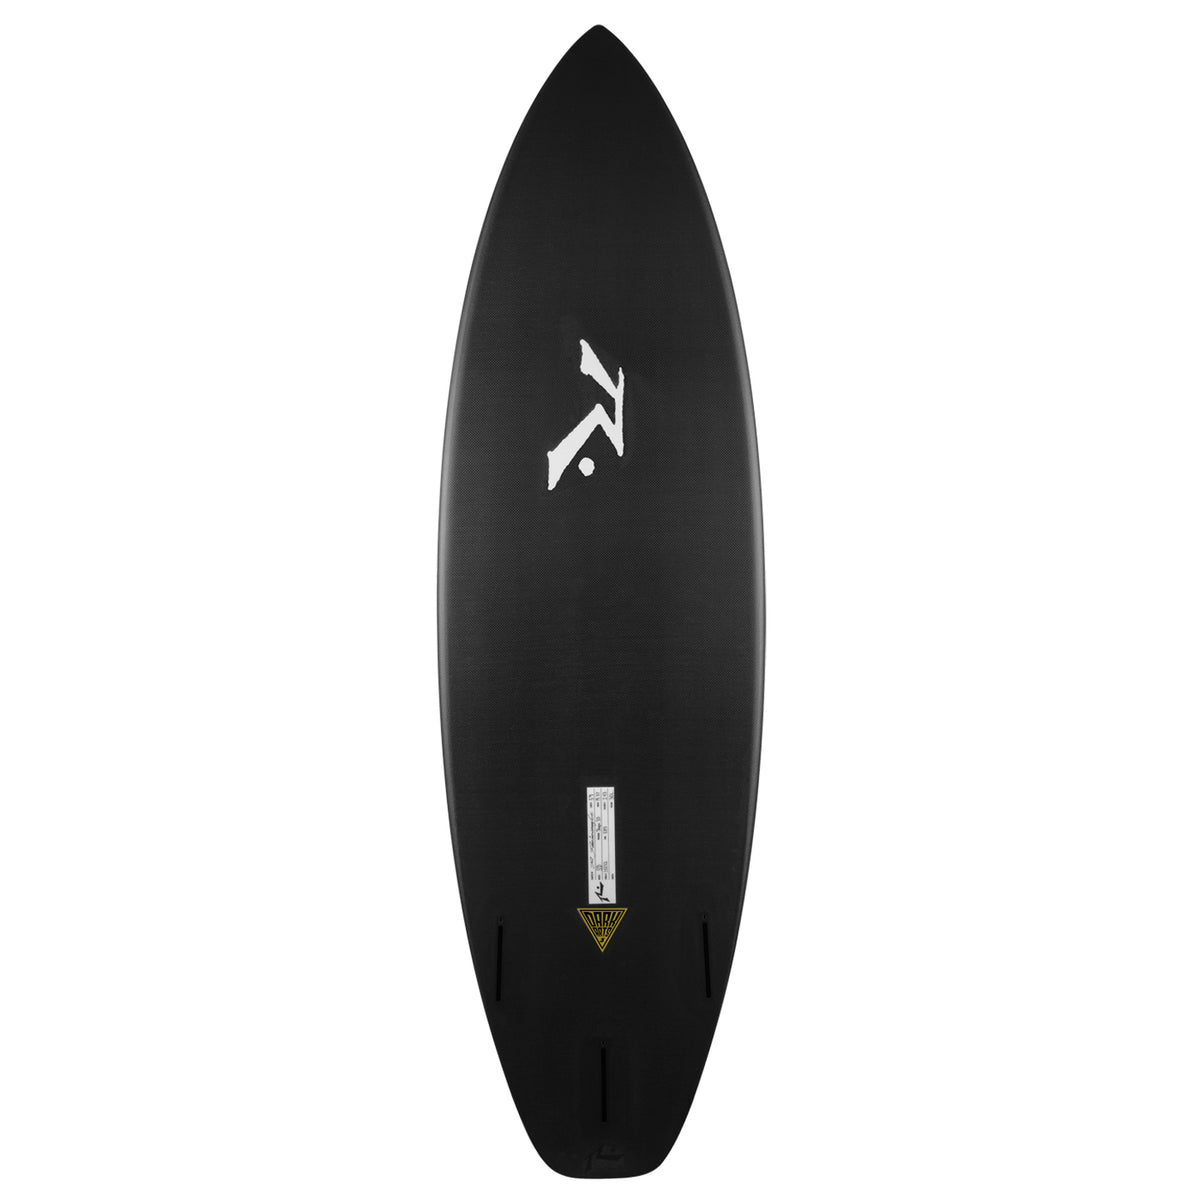 SD Dark Arts - Bottom View - Rusty Surfboards